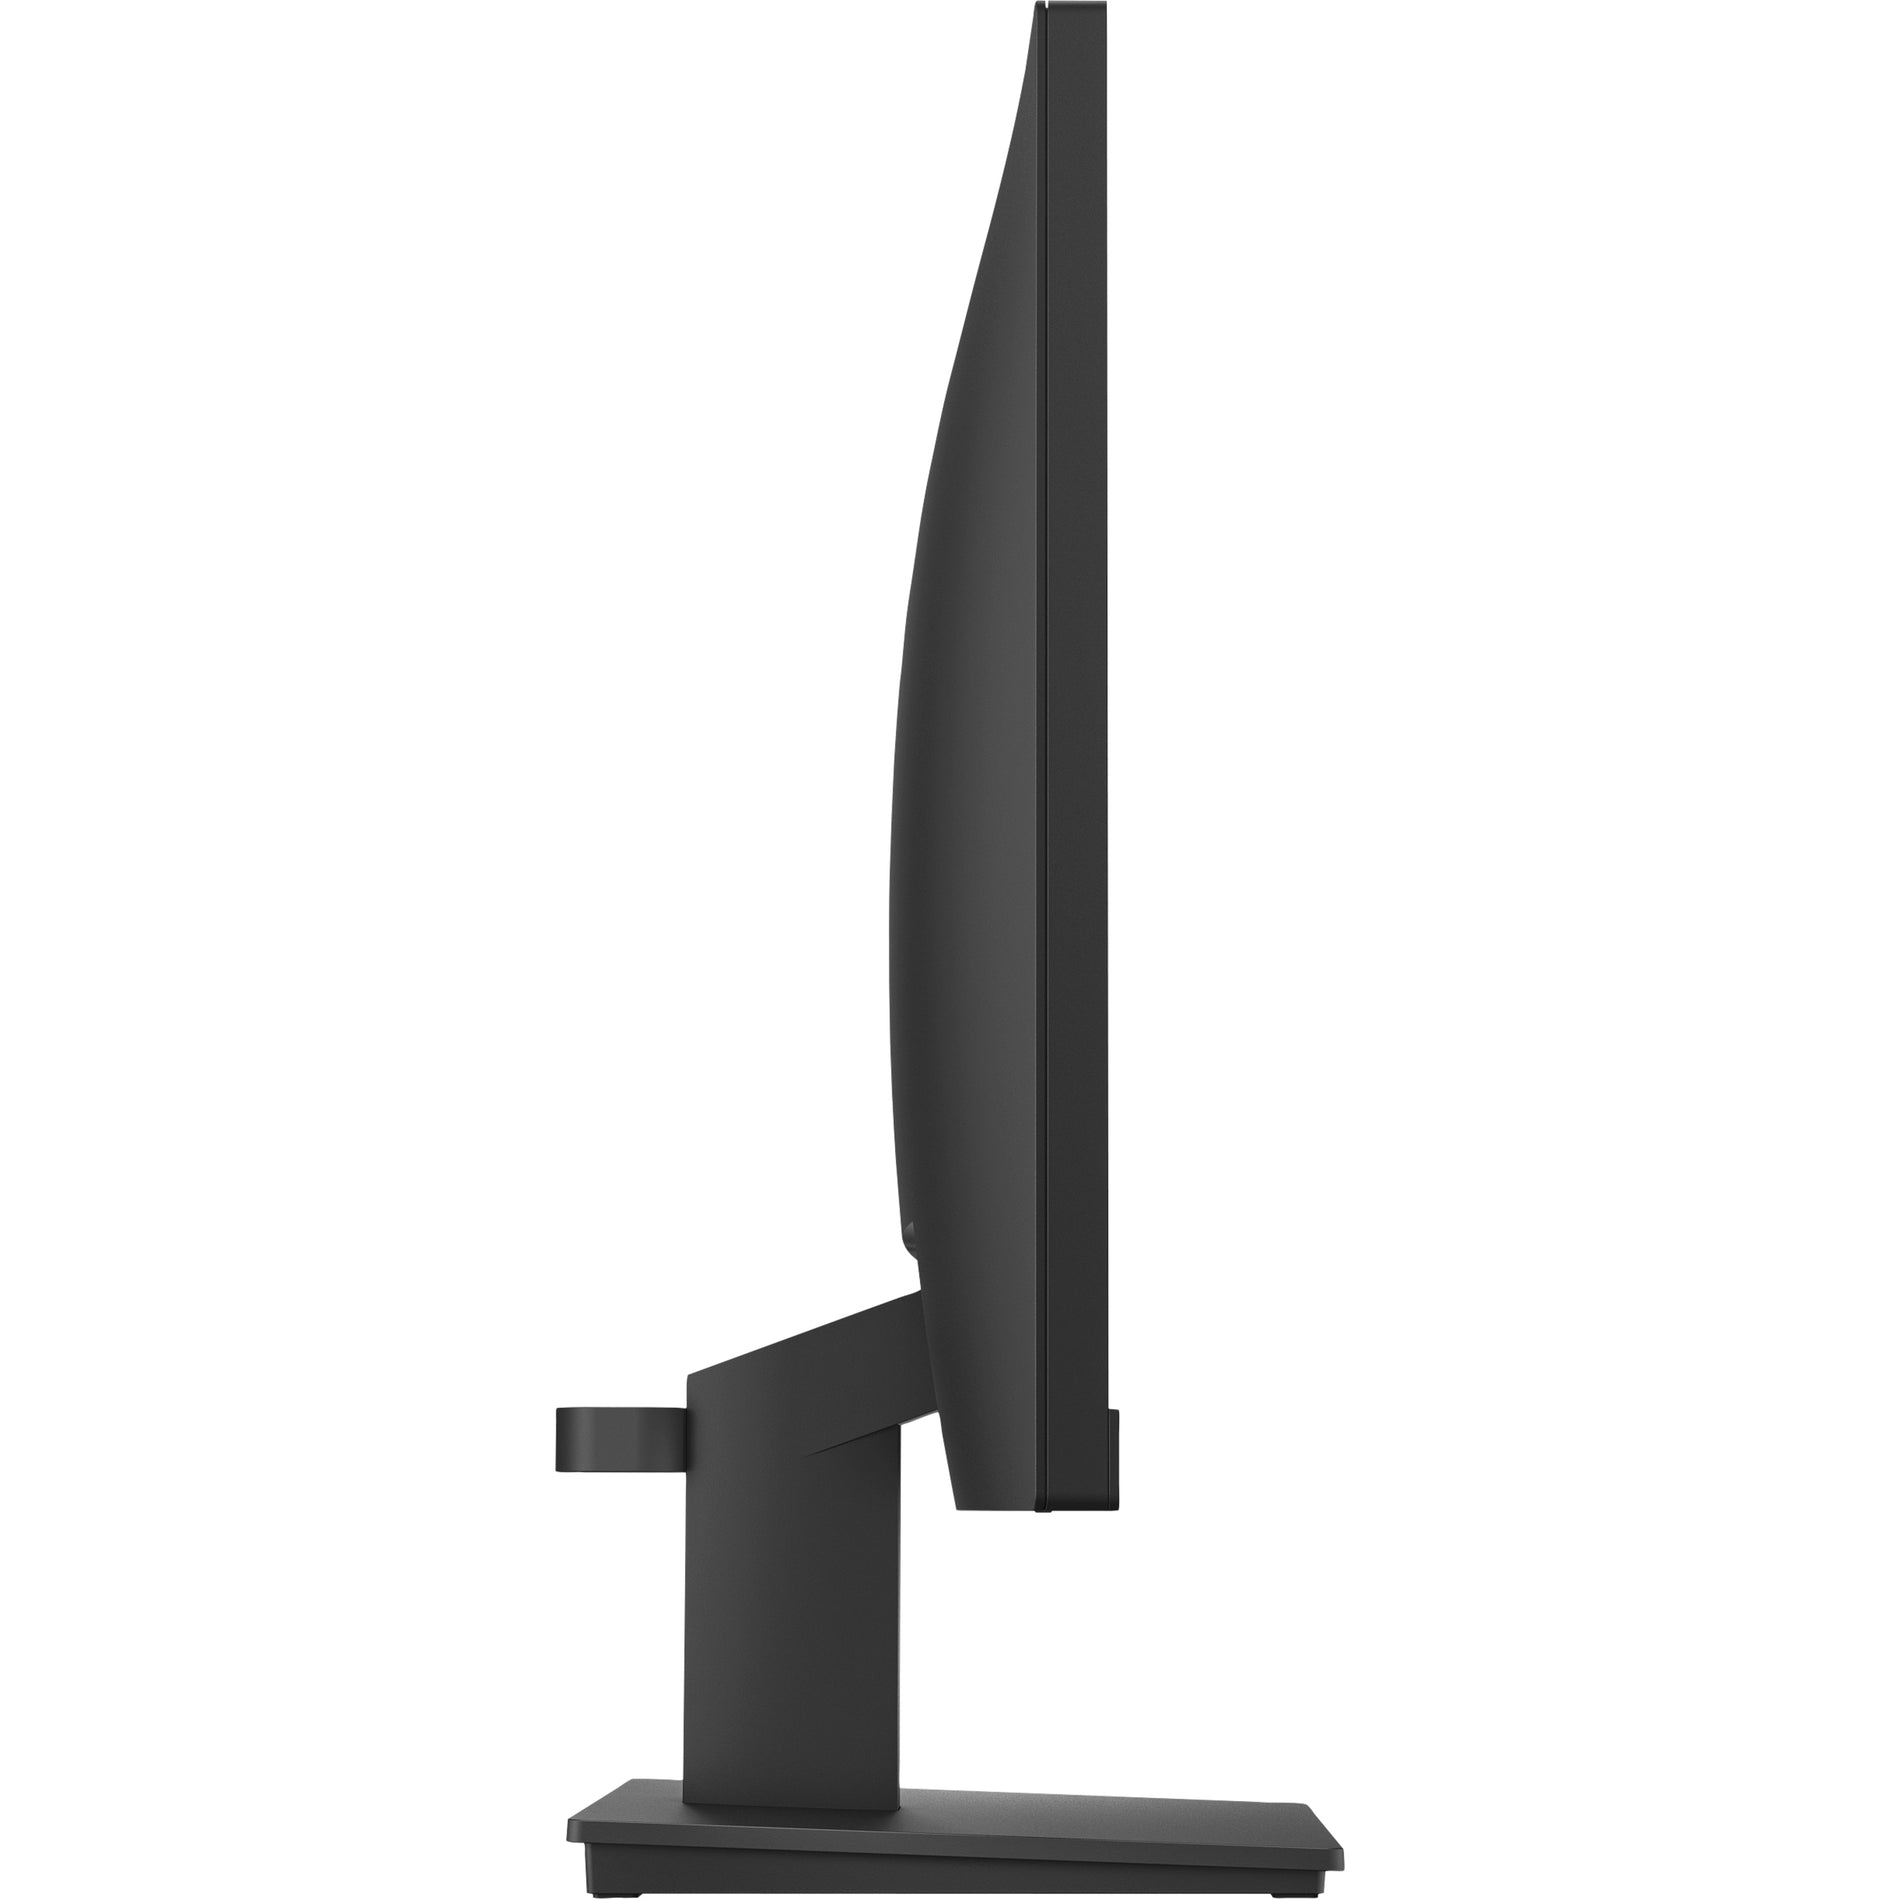 HP P22 G5 21.5" Full HD LCD Monitor, Black, 3 Year Warranty, HDMI, DisplayPort